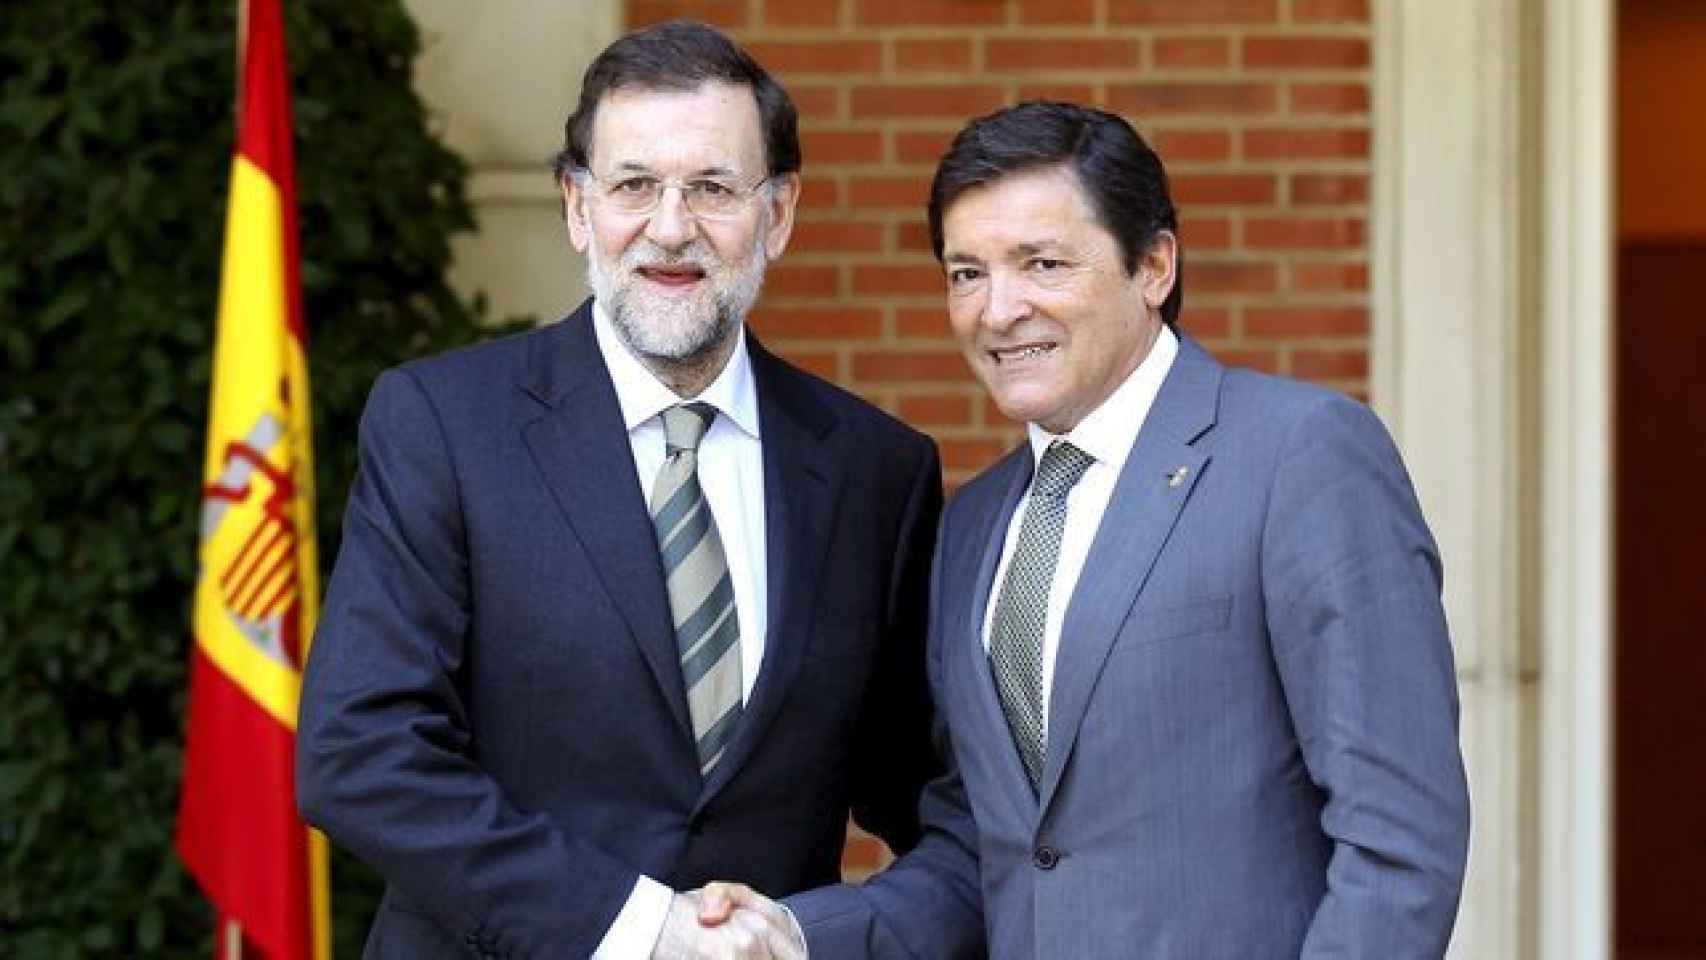 Rajoy recibió al presidente asturiano en Moncloa en 2012.